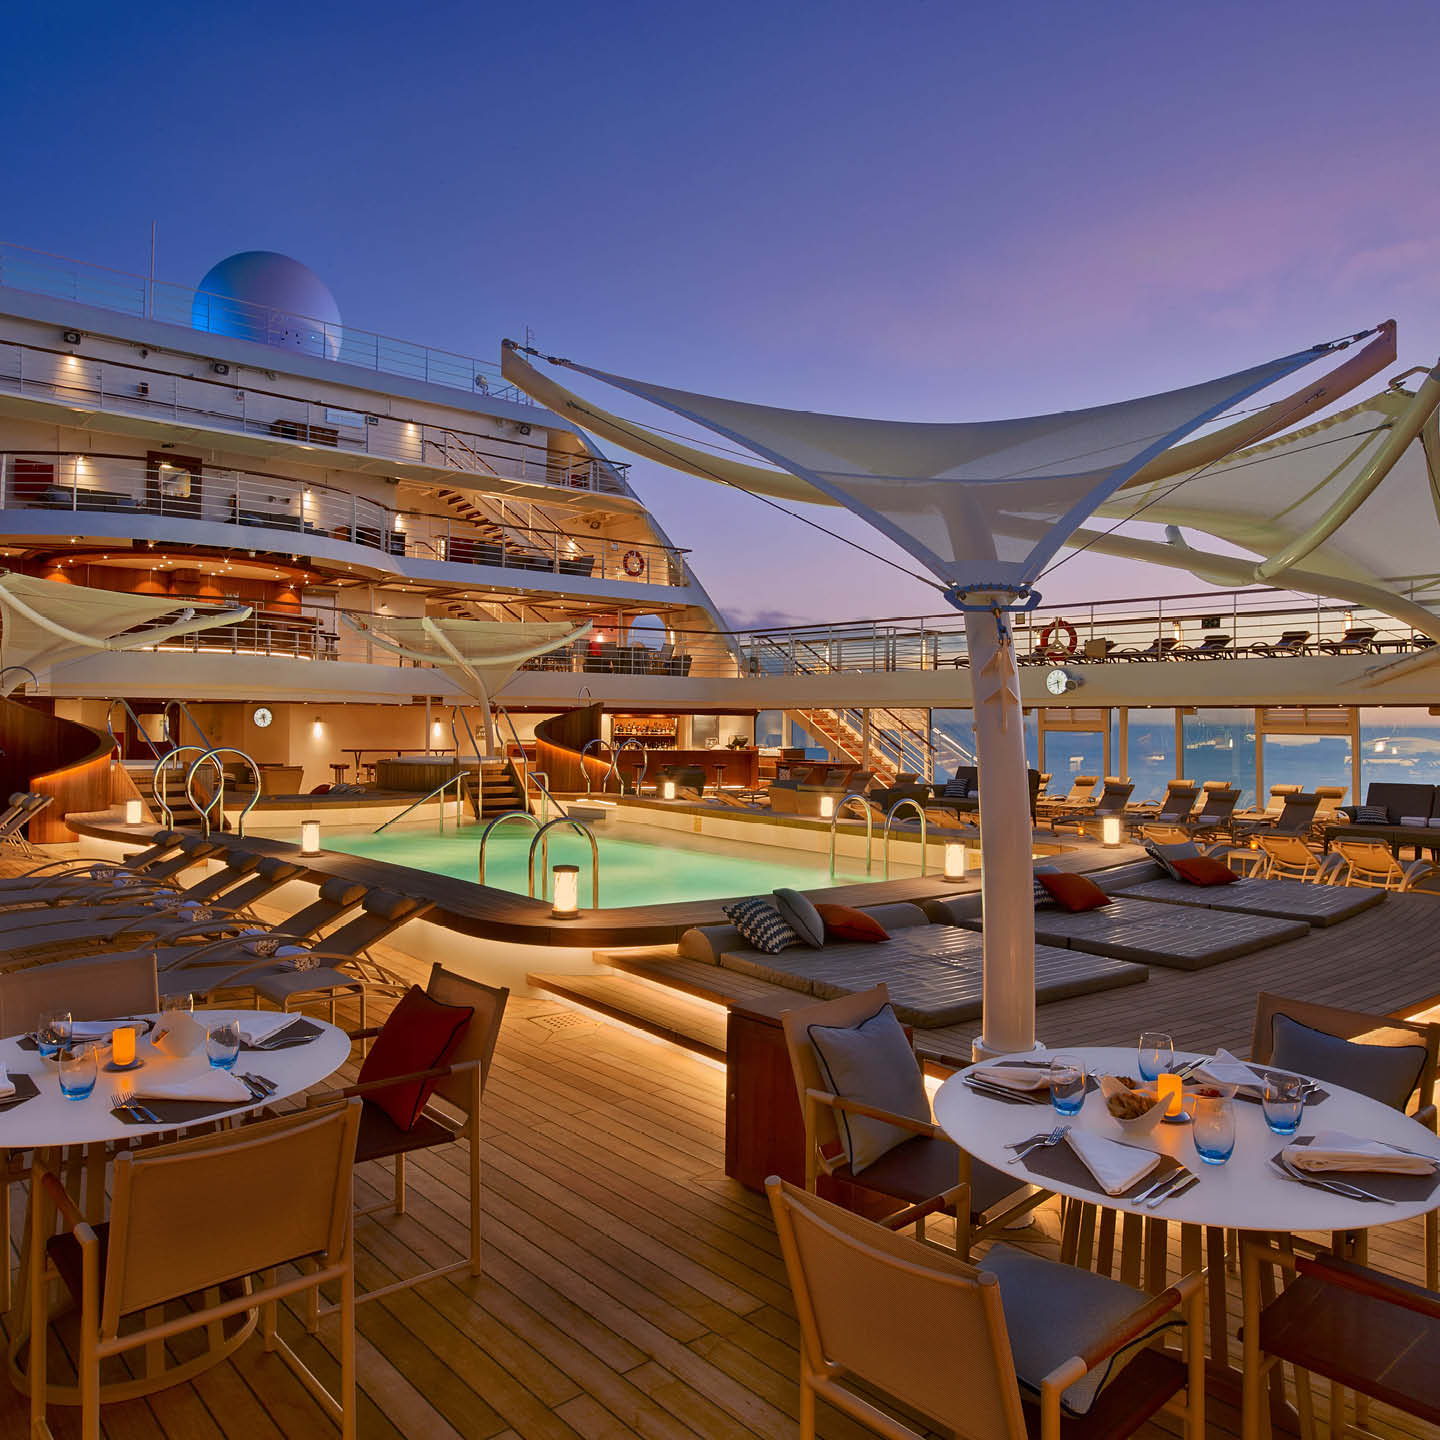 Seabourn Cruise Deals